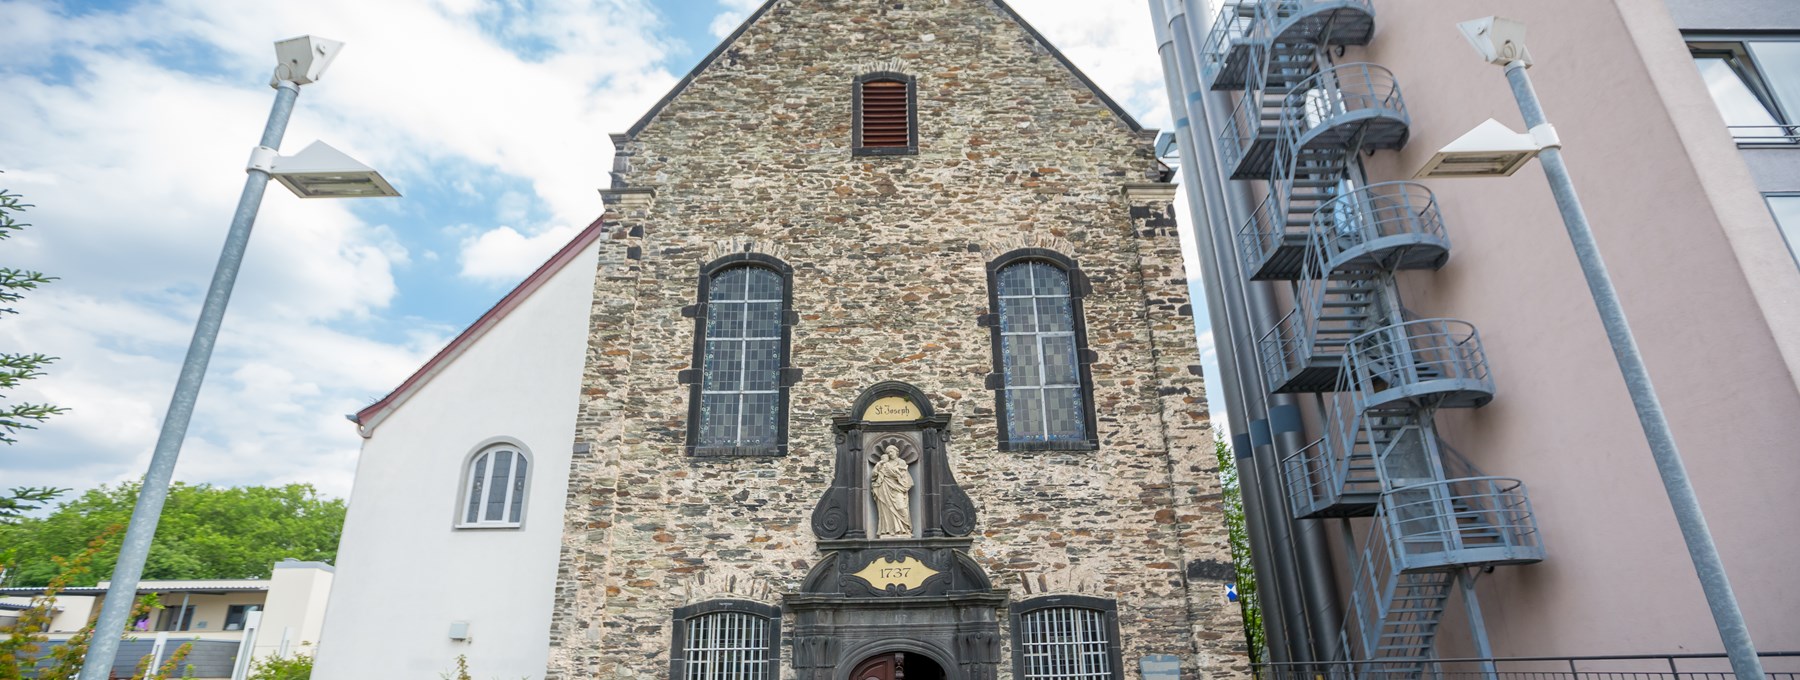 Hospitalkirche Andernach